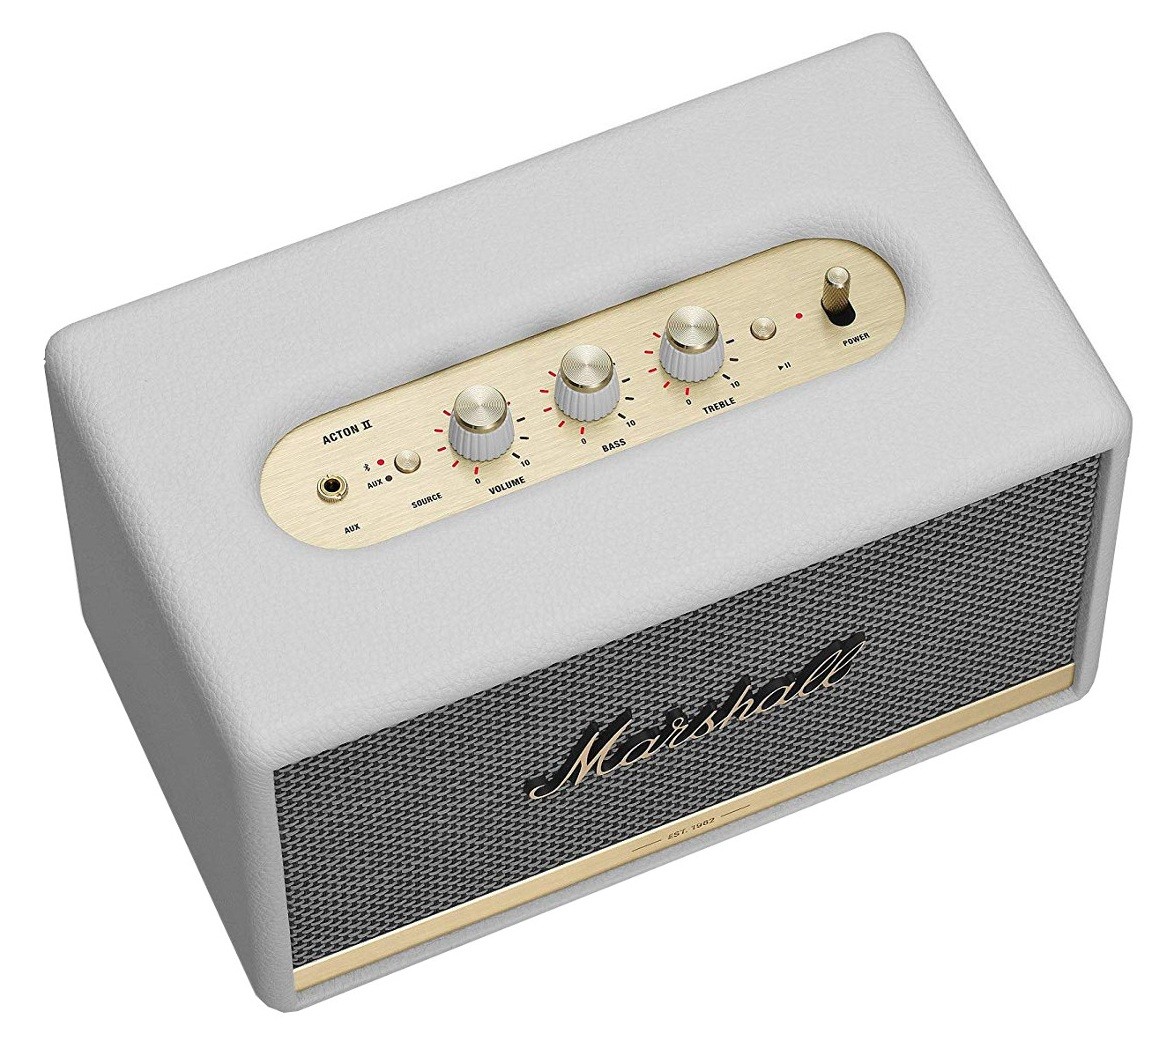 Marshall Acton BT II White компактная акустическая система с Bluetooth и Wi-Fi, цвет белый